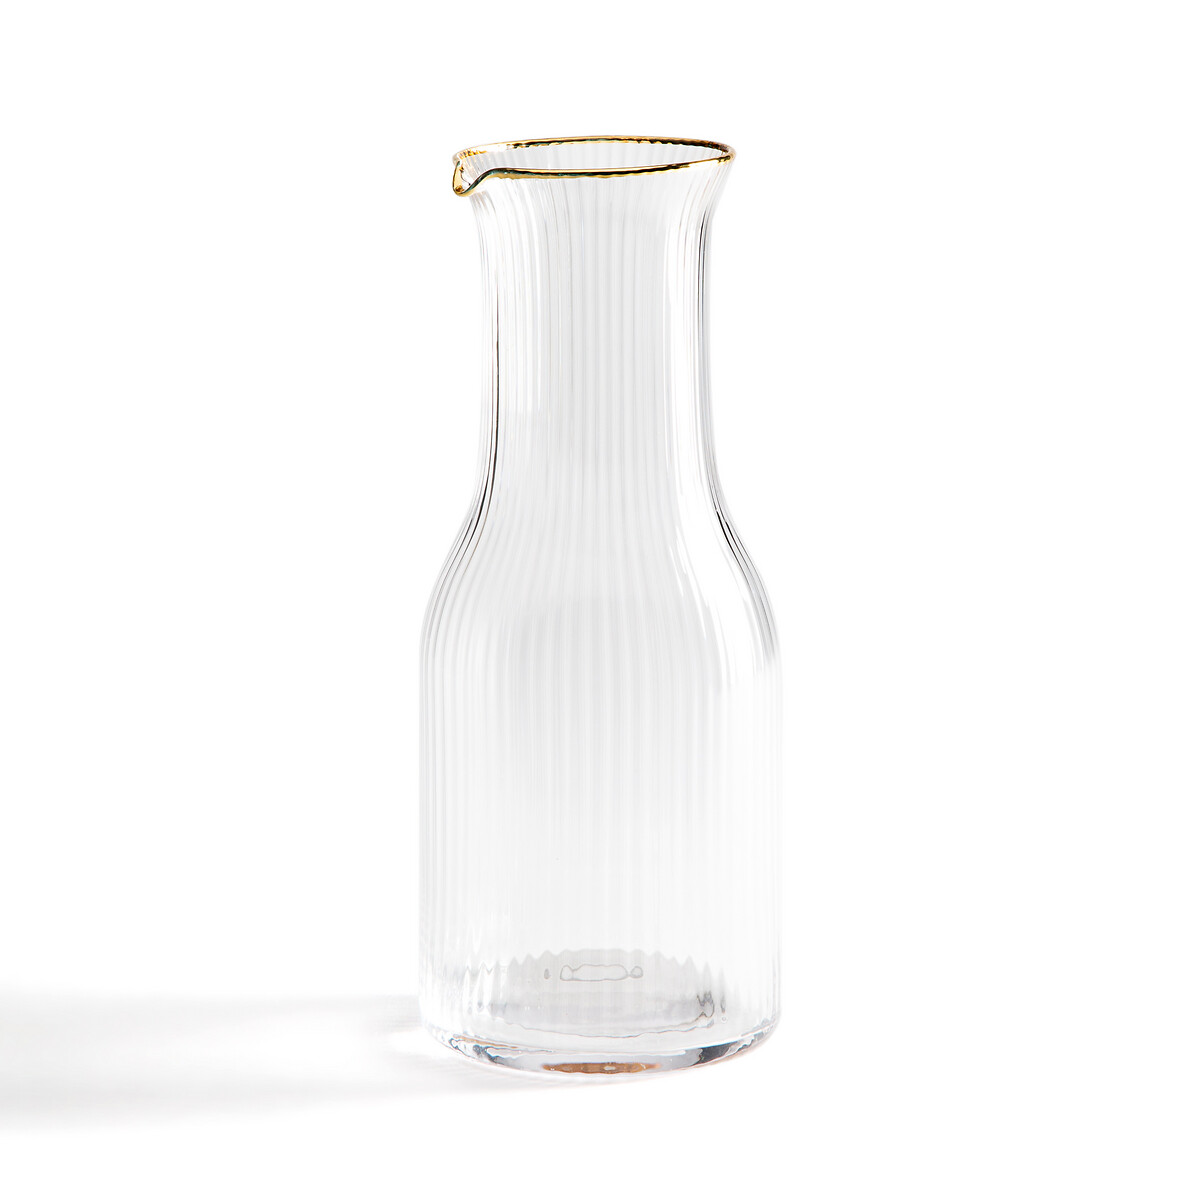 Dan efficiëntie vrijheid Karaf in glas lurik transparant La Redoute Interieurs | La Redoute